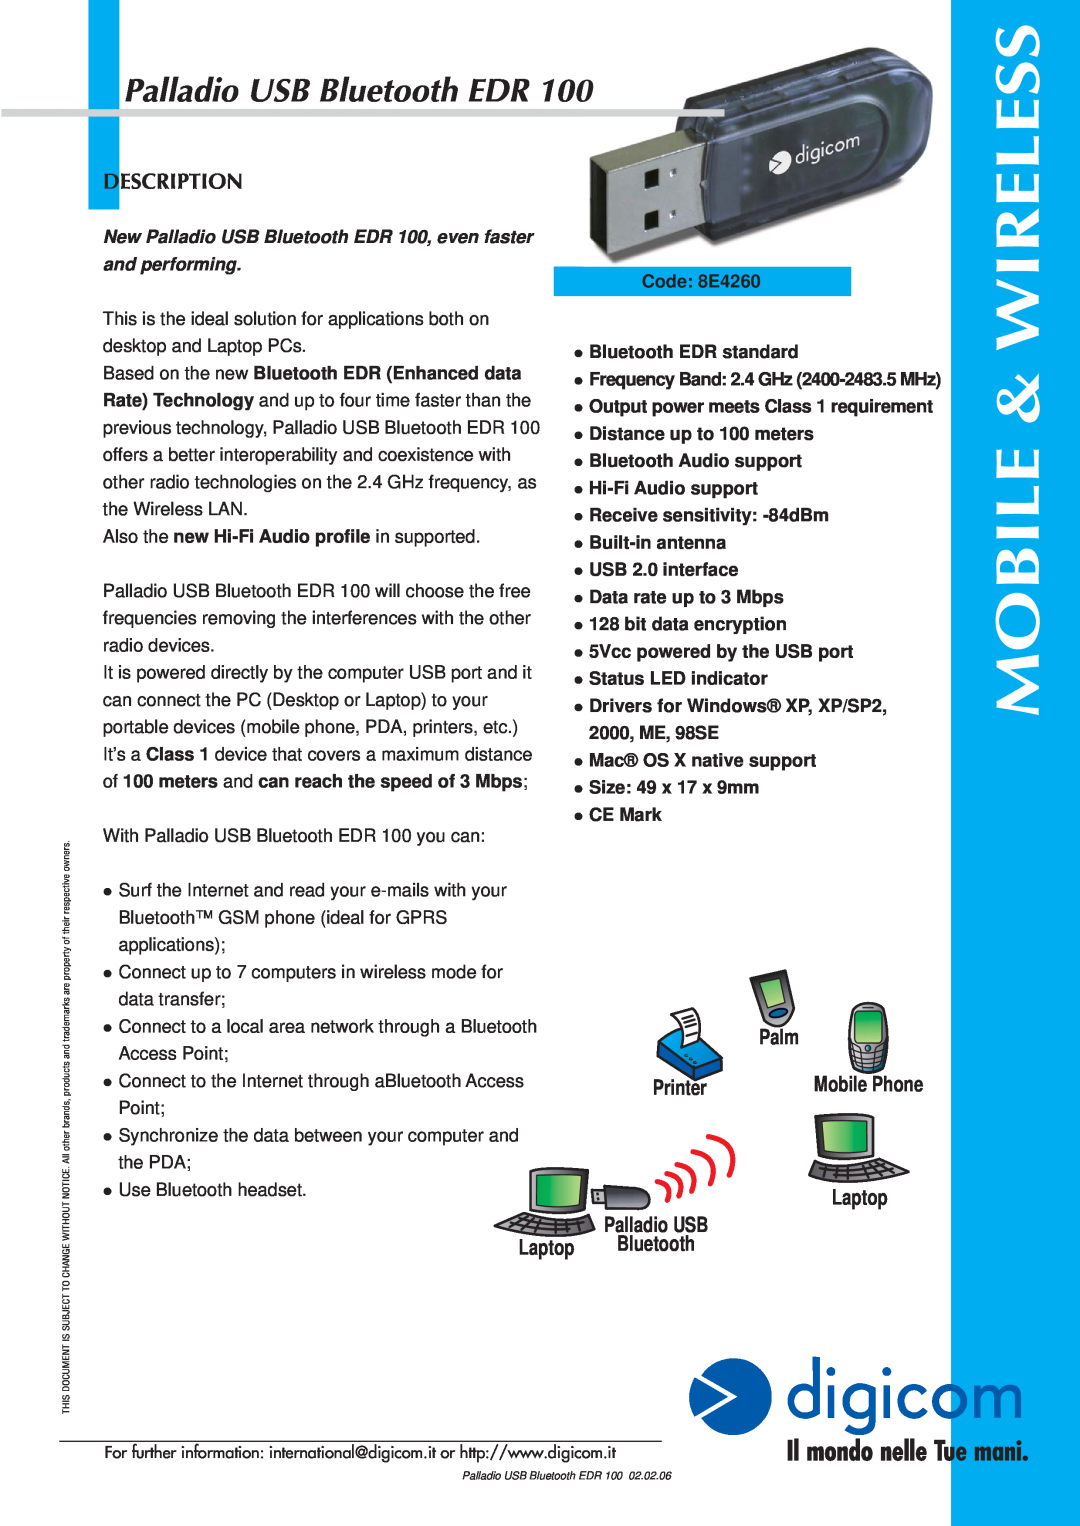 Digicom EDR 100 manual Mobile, Wireless, Palladio USB Bluetooth EDR, Description, Laptop, Palm, Printer, and performing 